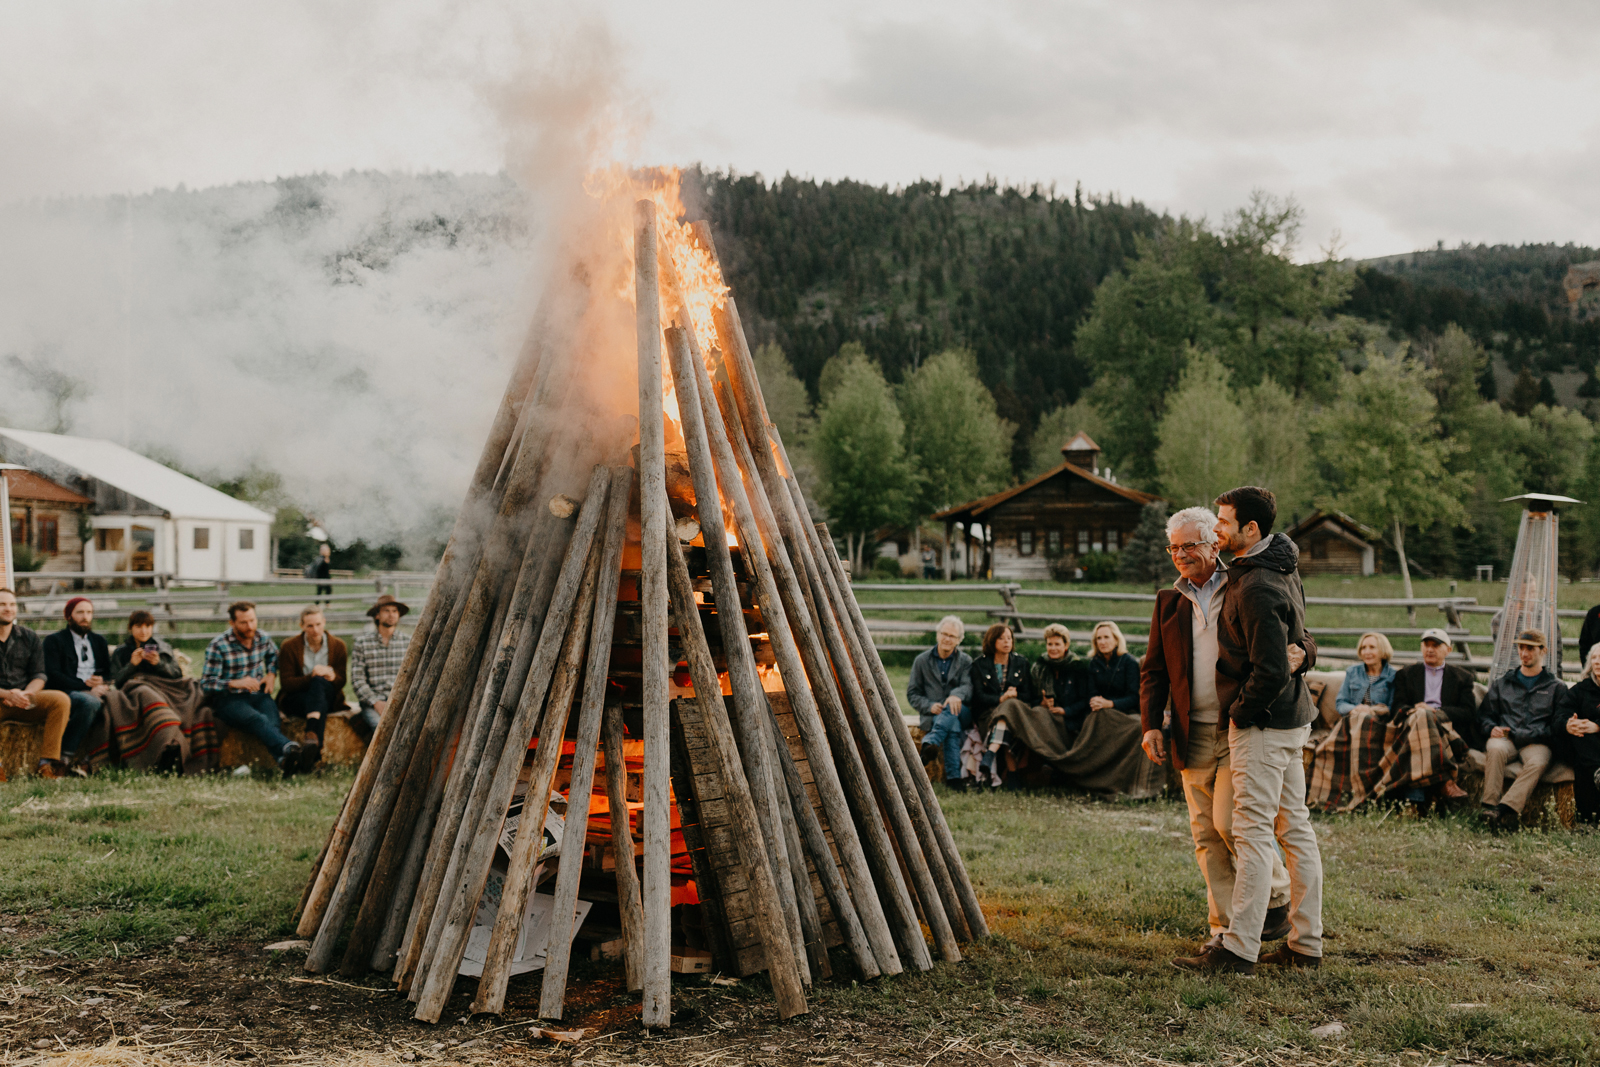 wedding bonfire